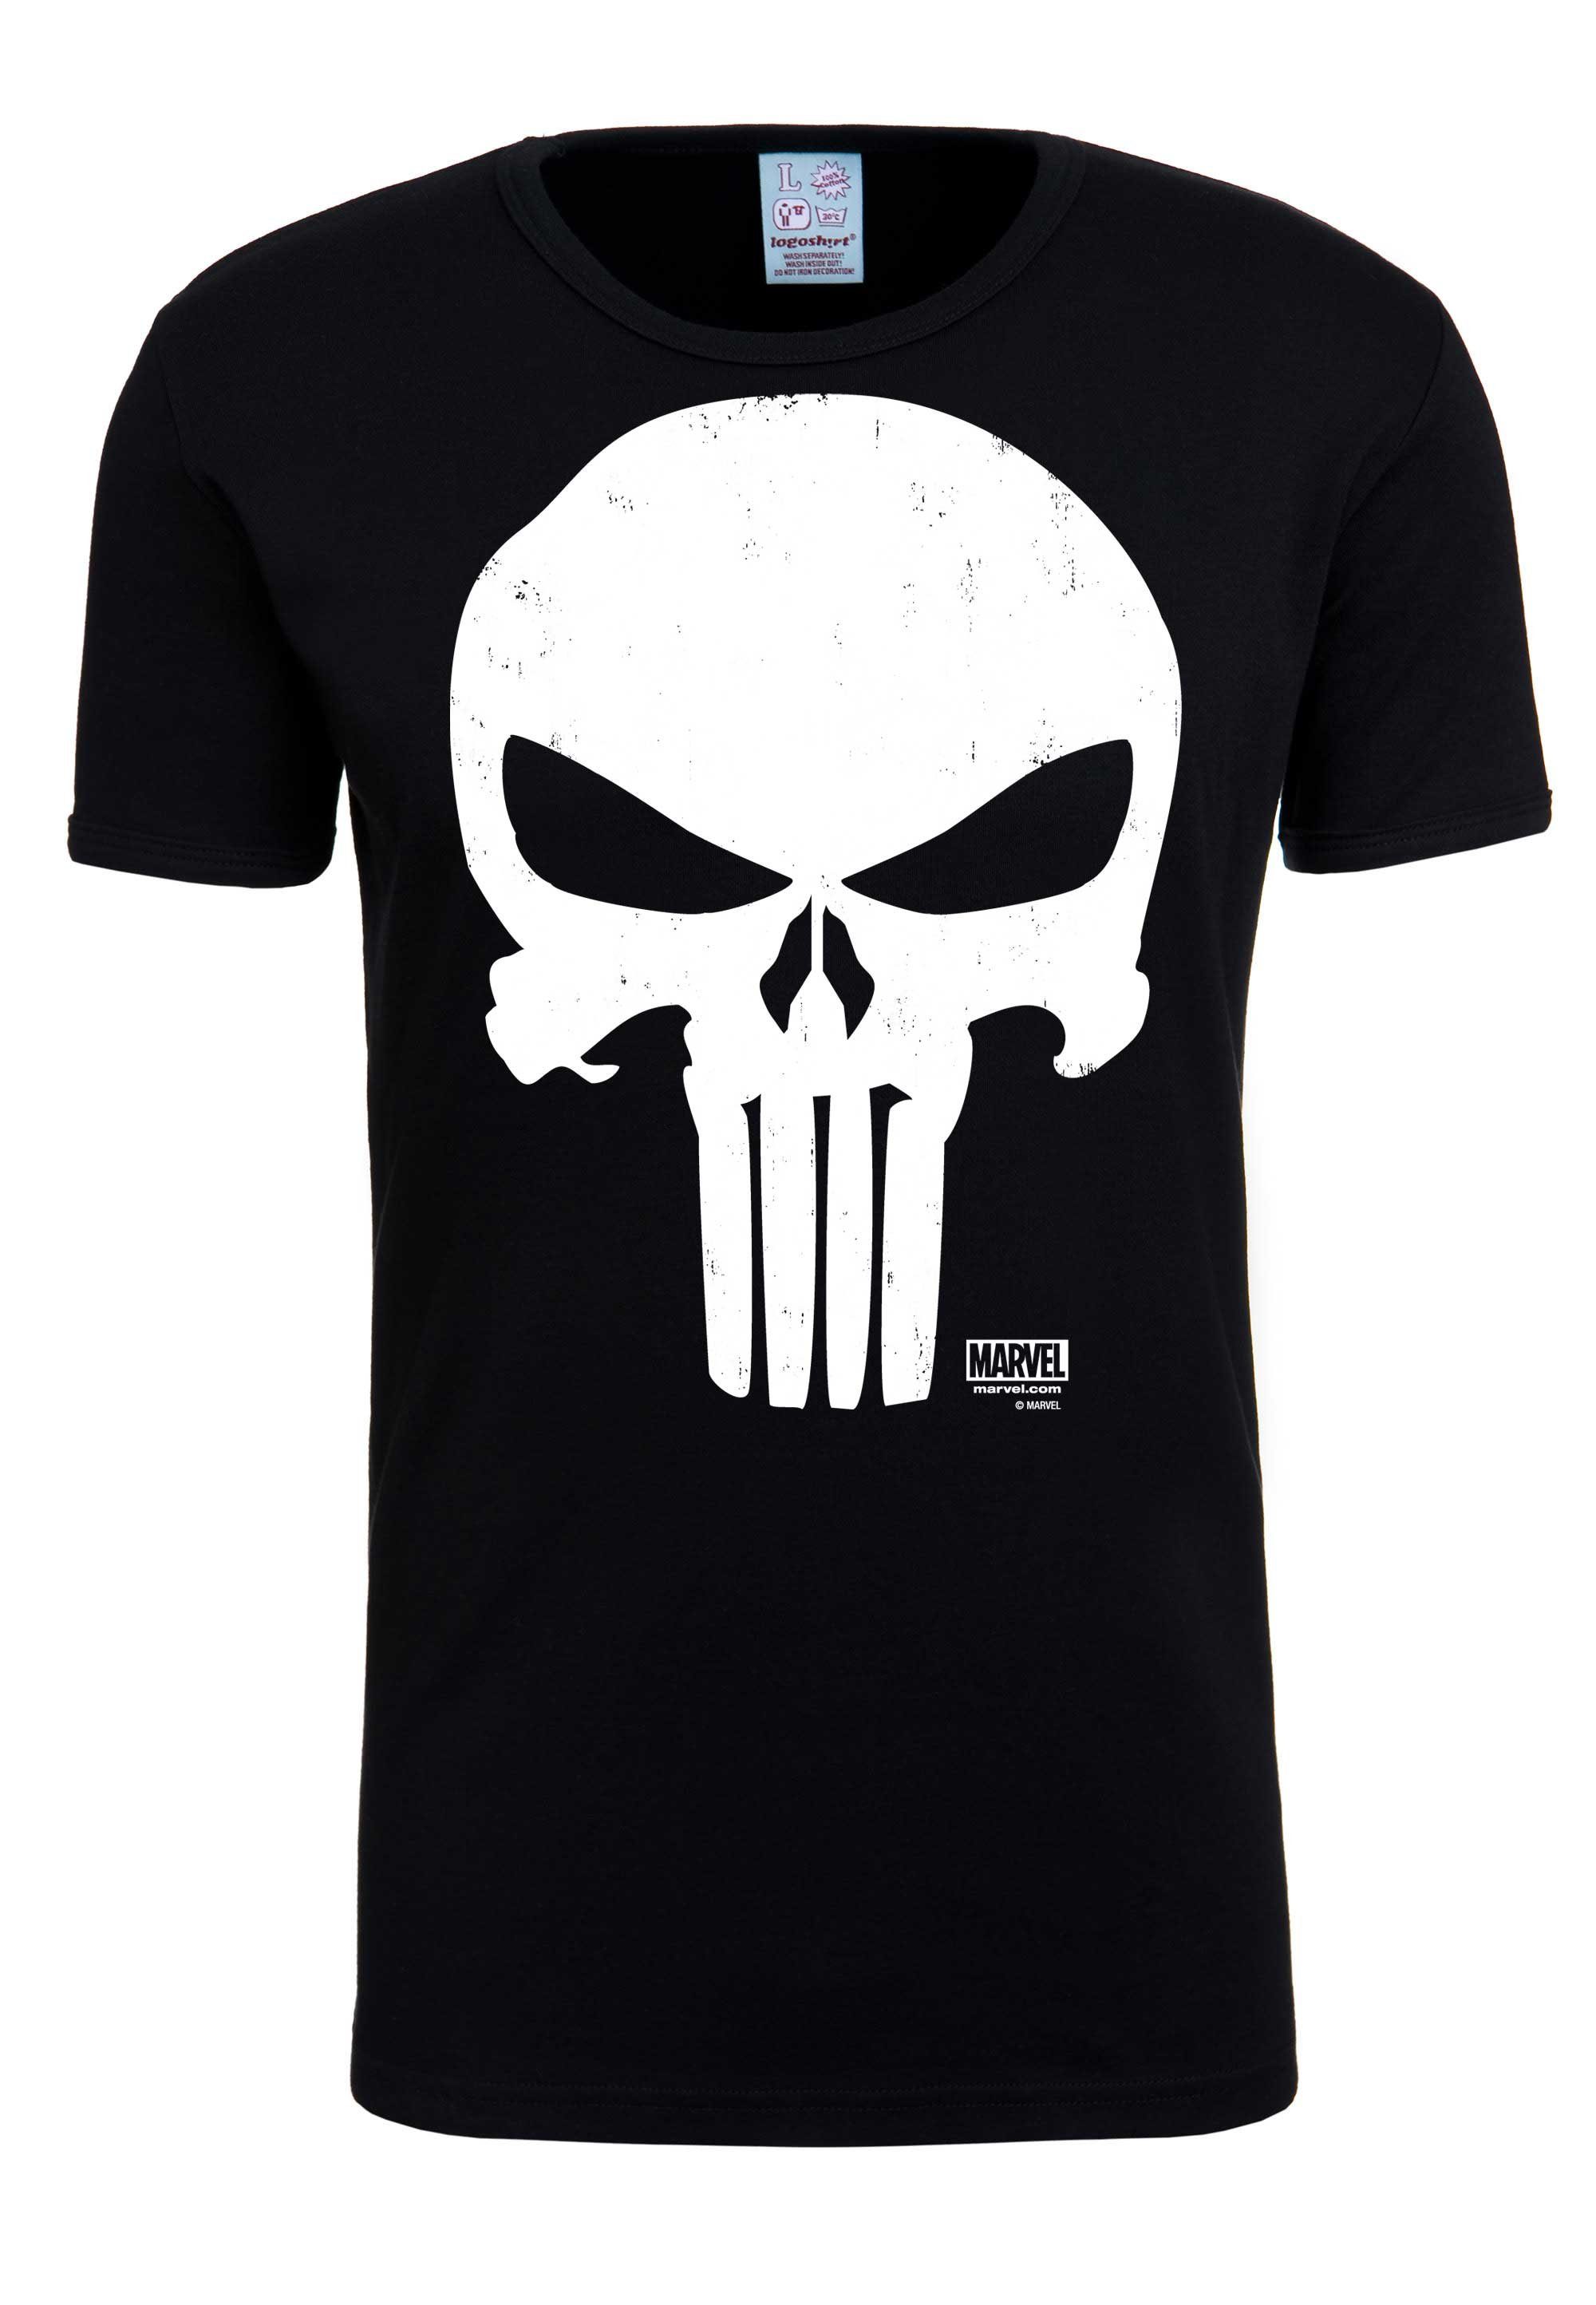 Punisher-Print - LOGOSHIRT Marvel T-Shirt Punisher großem mit